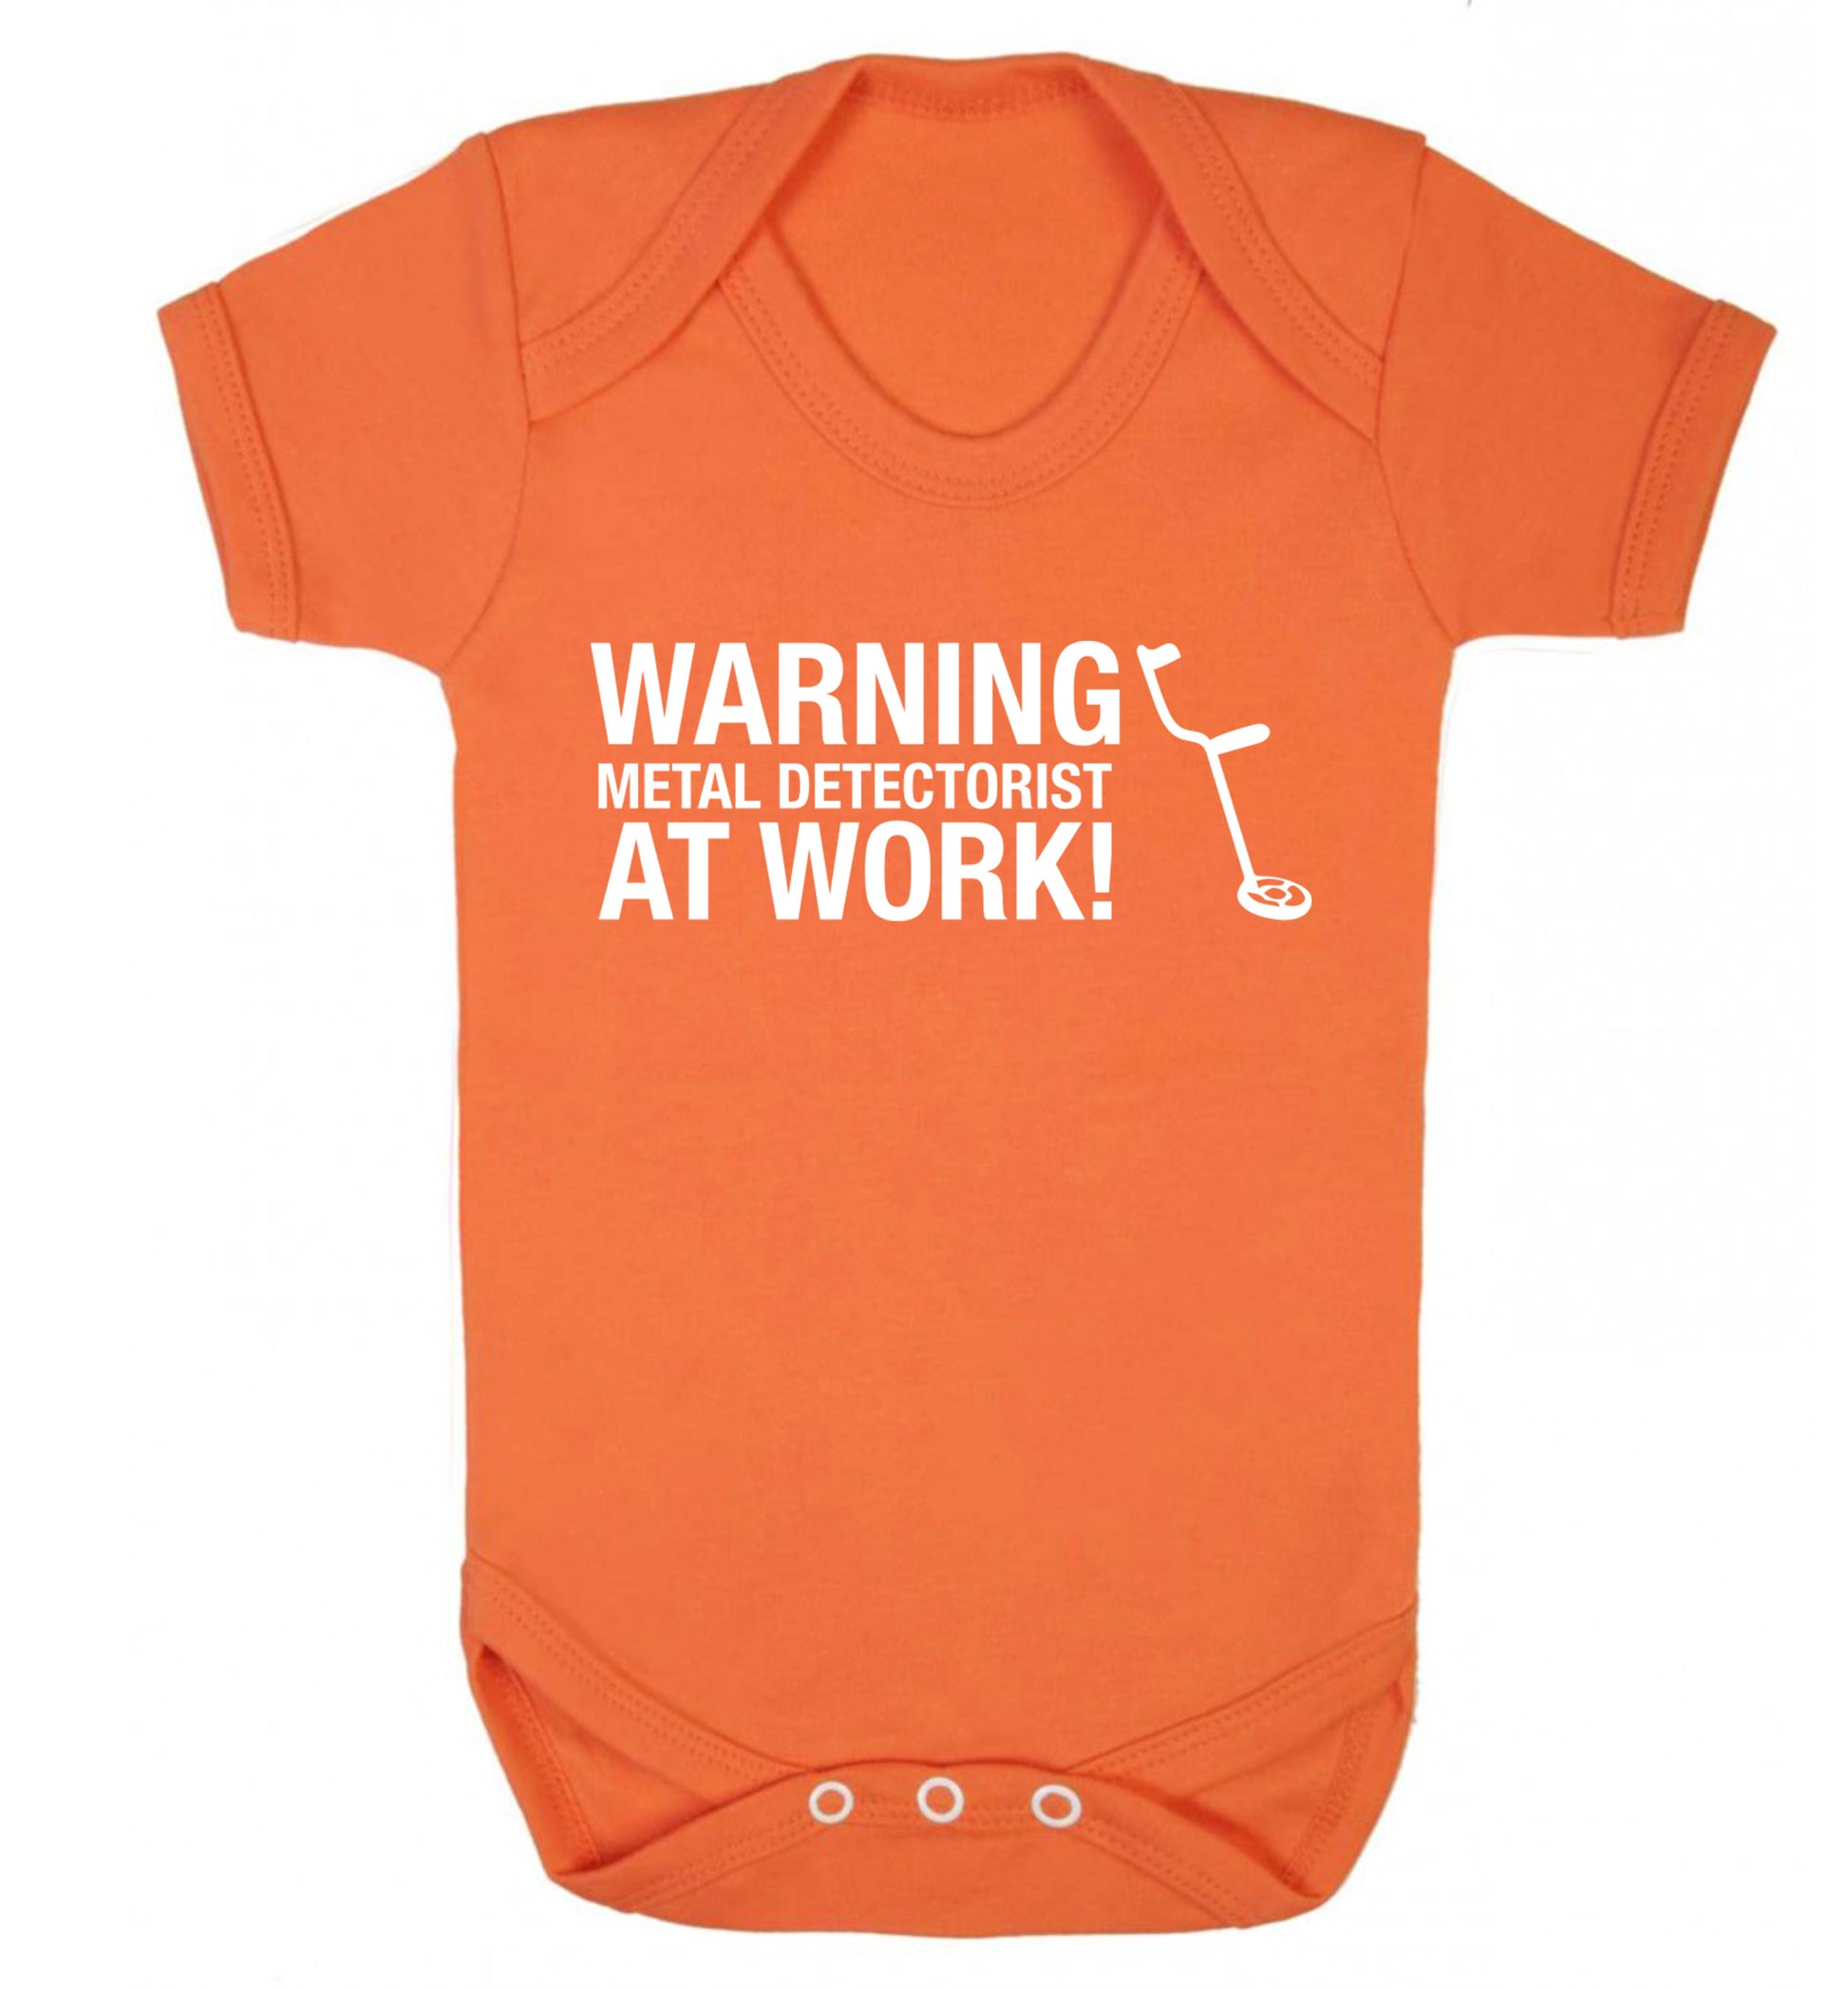 Warning metal detectorist at work! Baby Vest orange 18-24 months